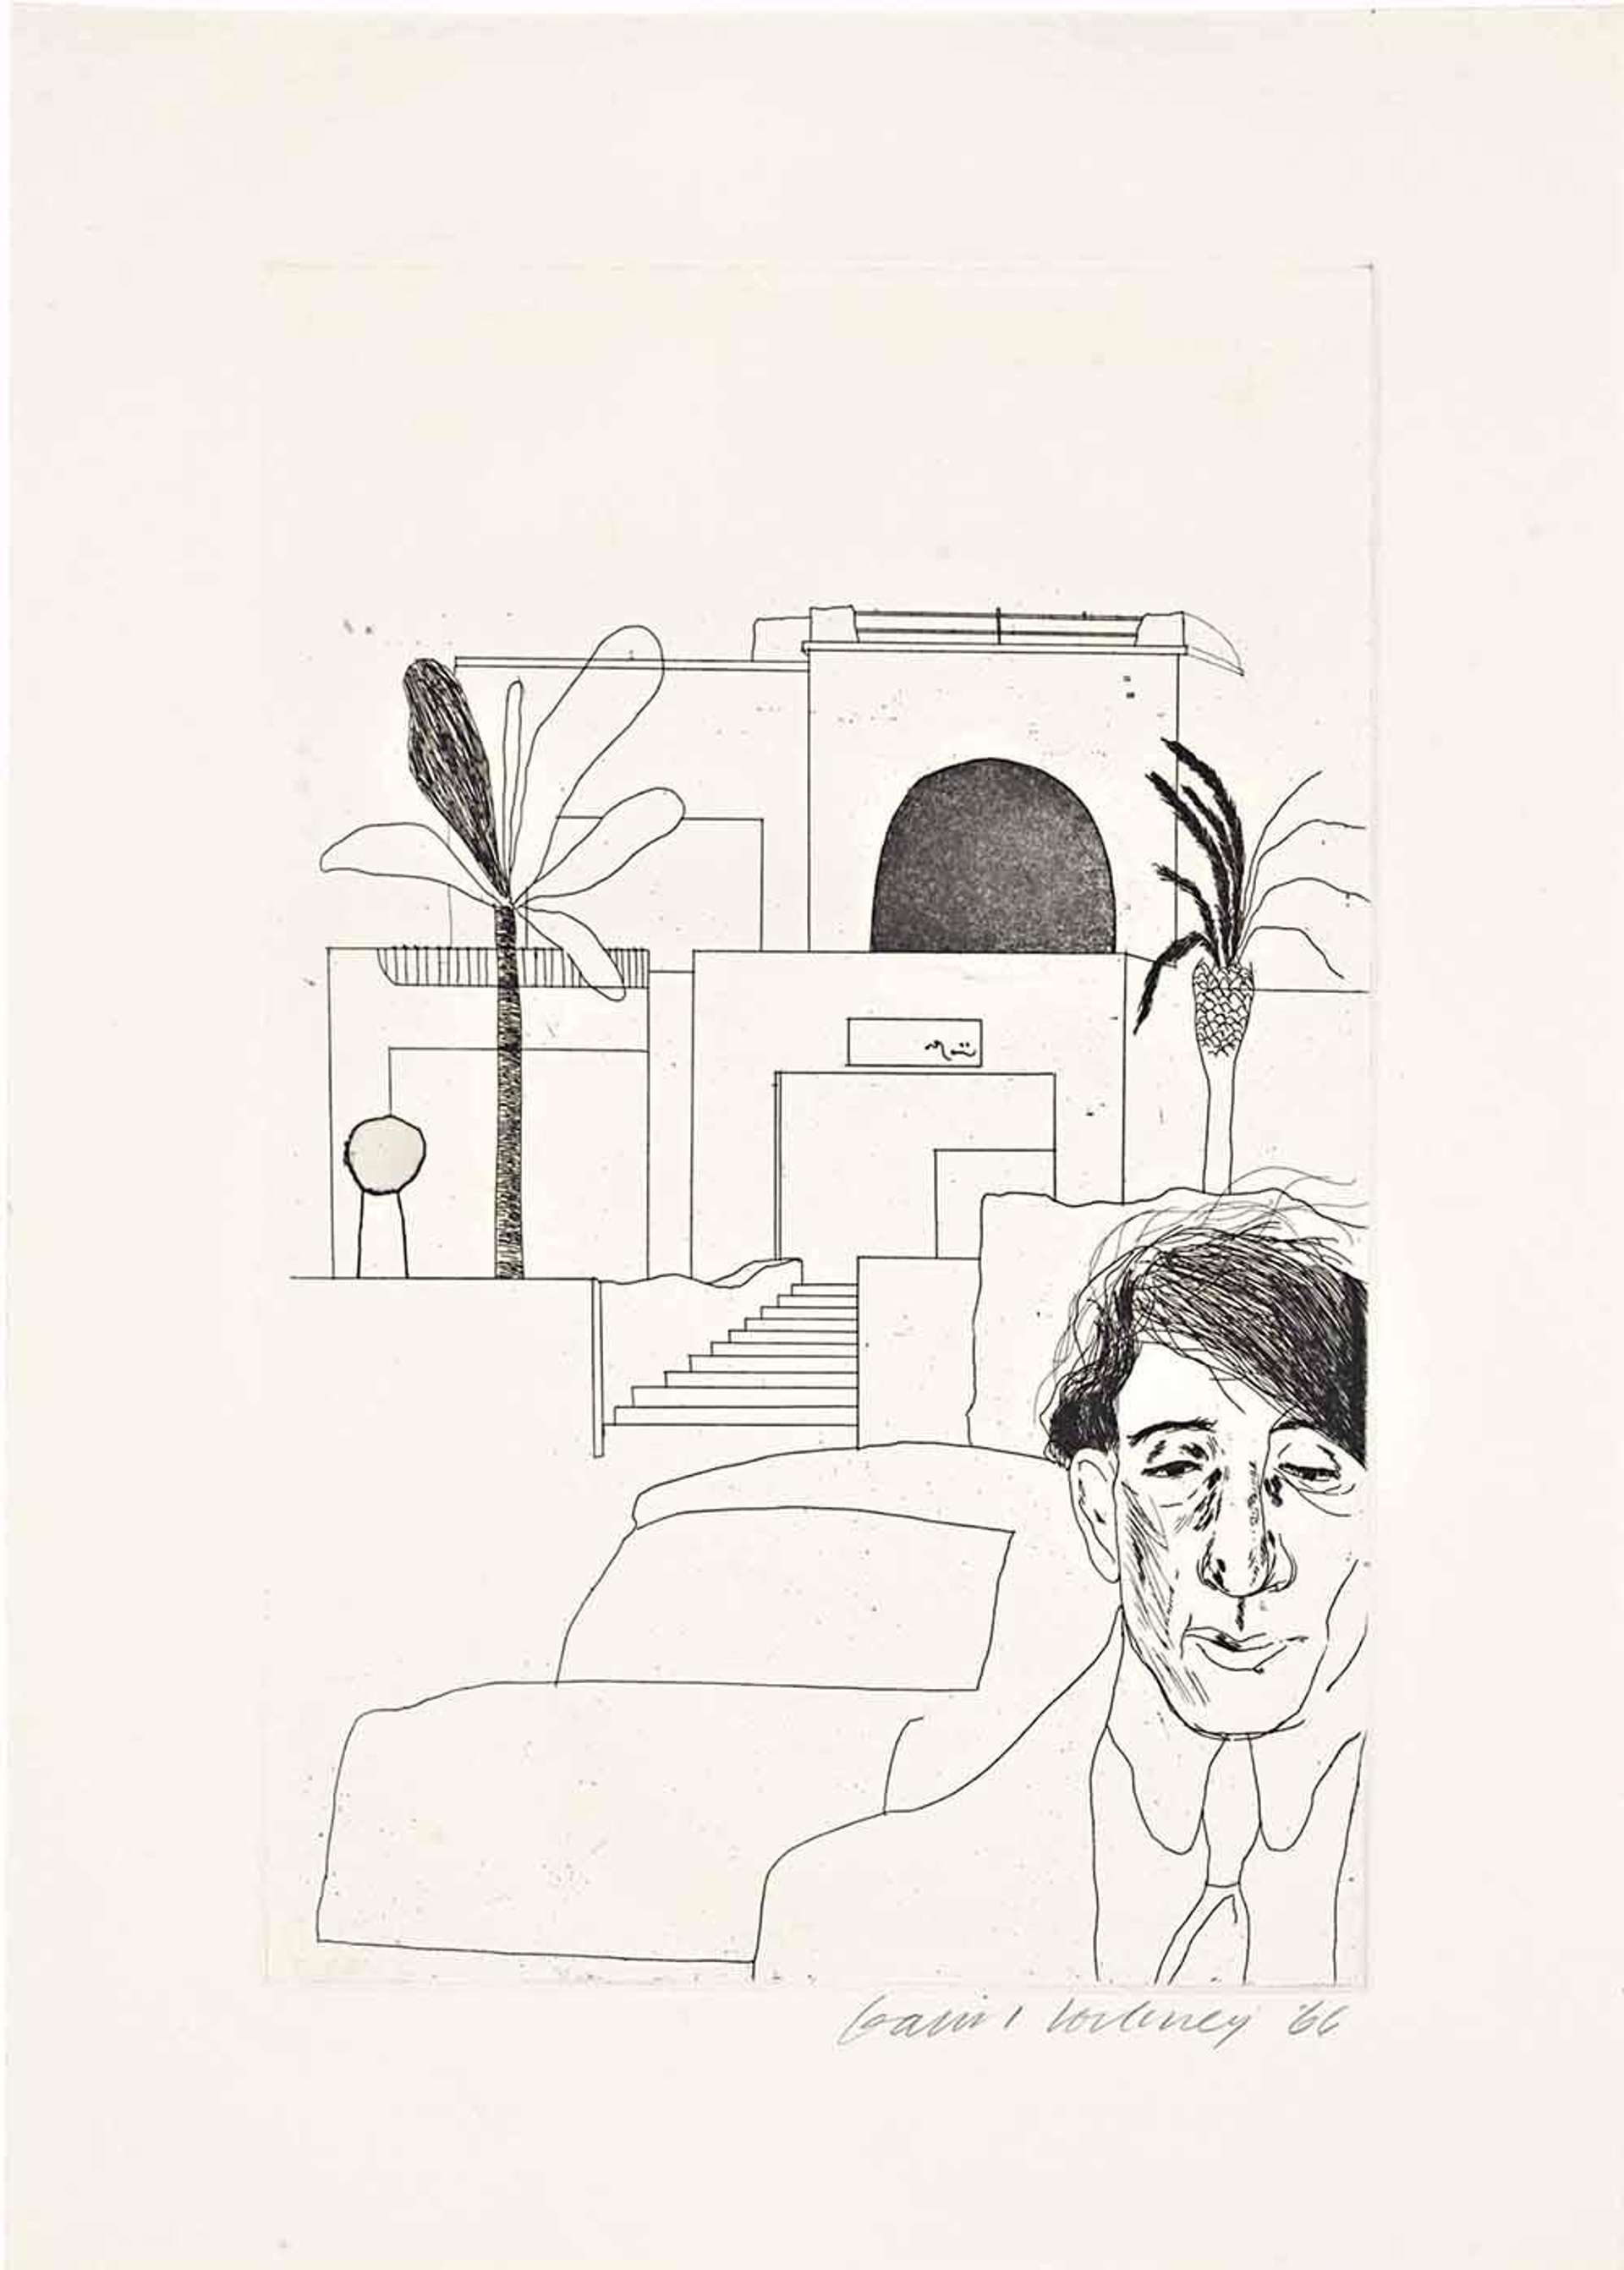 Illustrations For Fourteen Poems by C.P. Cavafy Edition A (complete set) - Signed Print by David Hockney 1966 - MyArtBroker